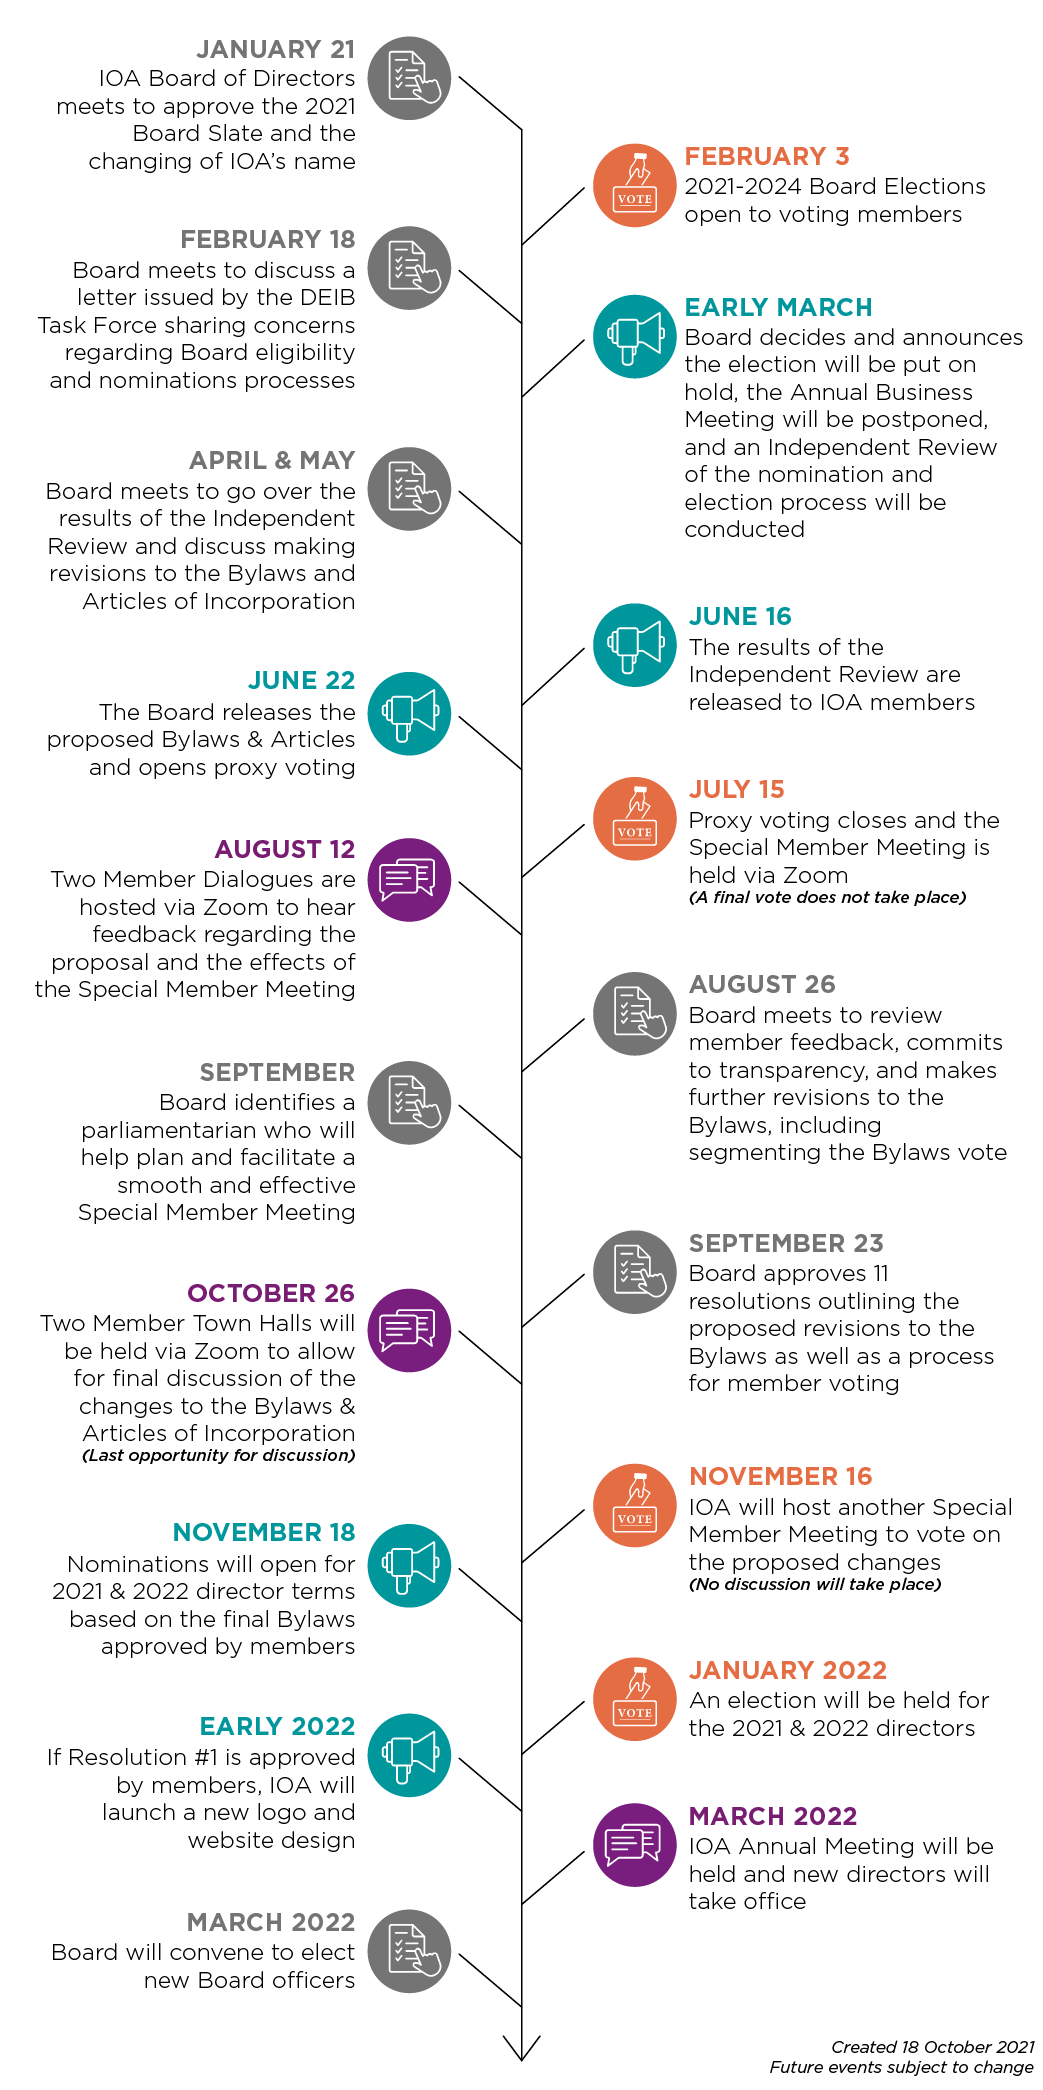 Graphic of 2021 Timeline Regarding IOA Bylaws